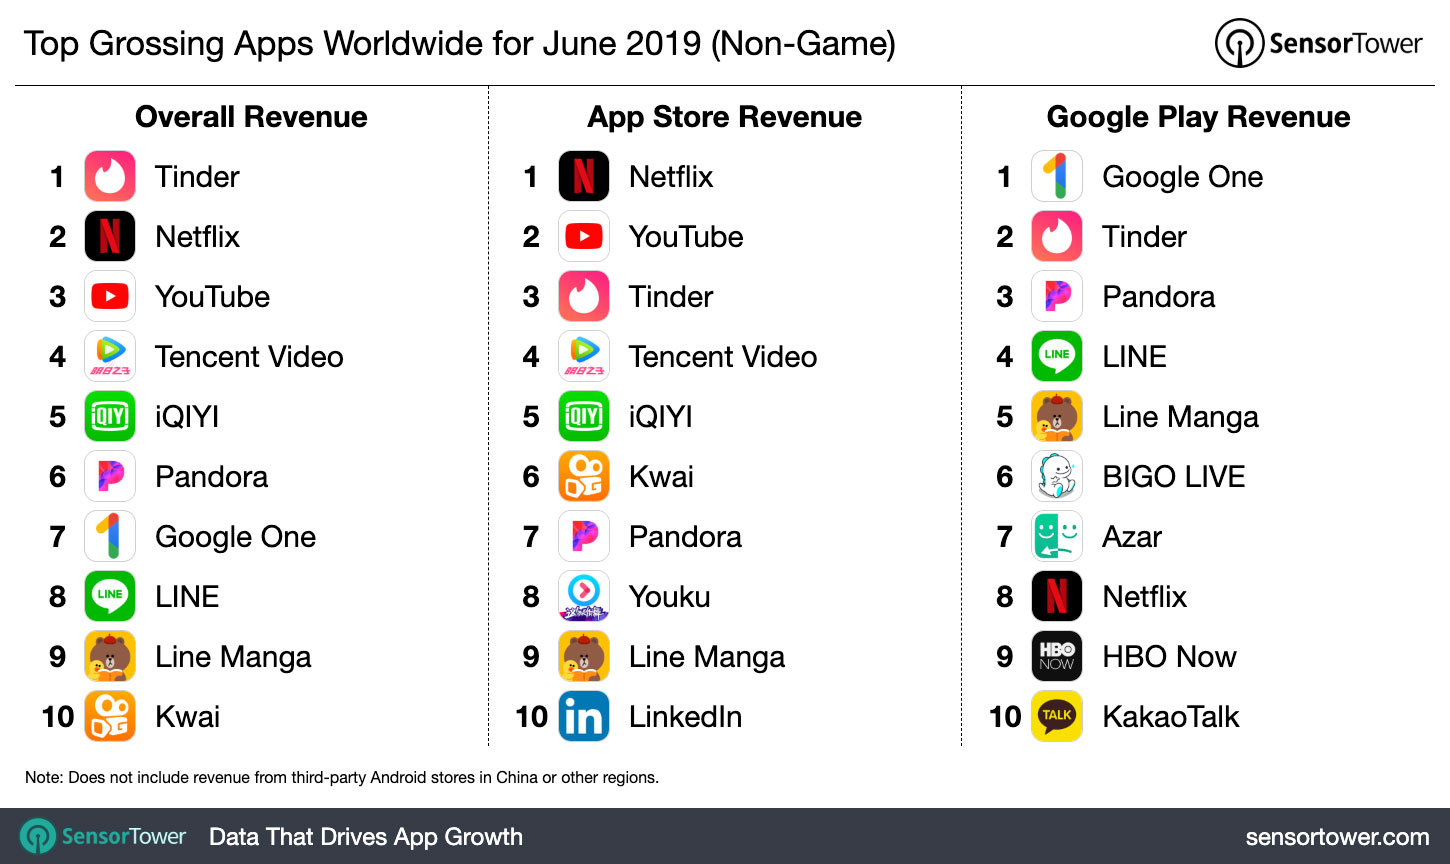 Top Grossing Apps Worldwide for June 2019